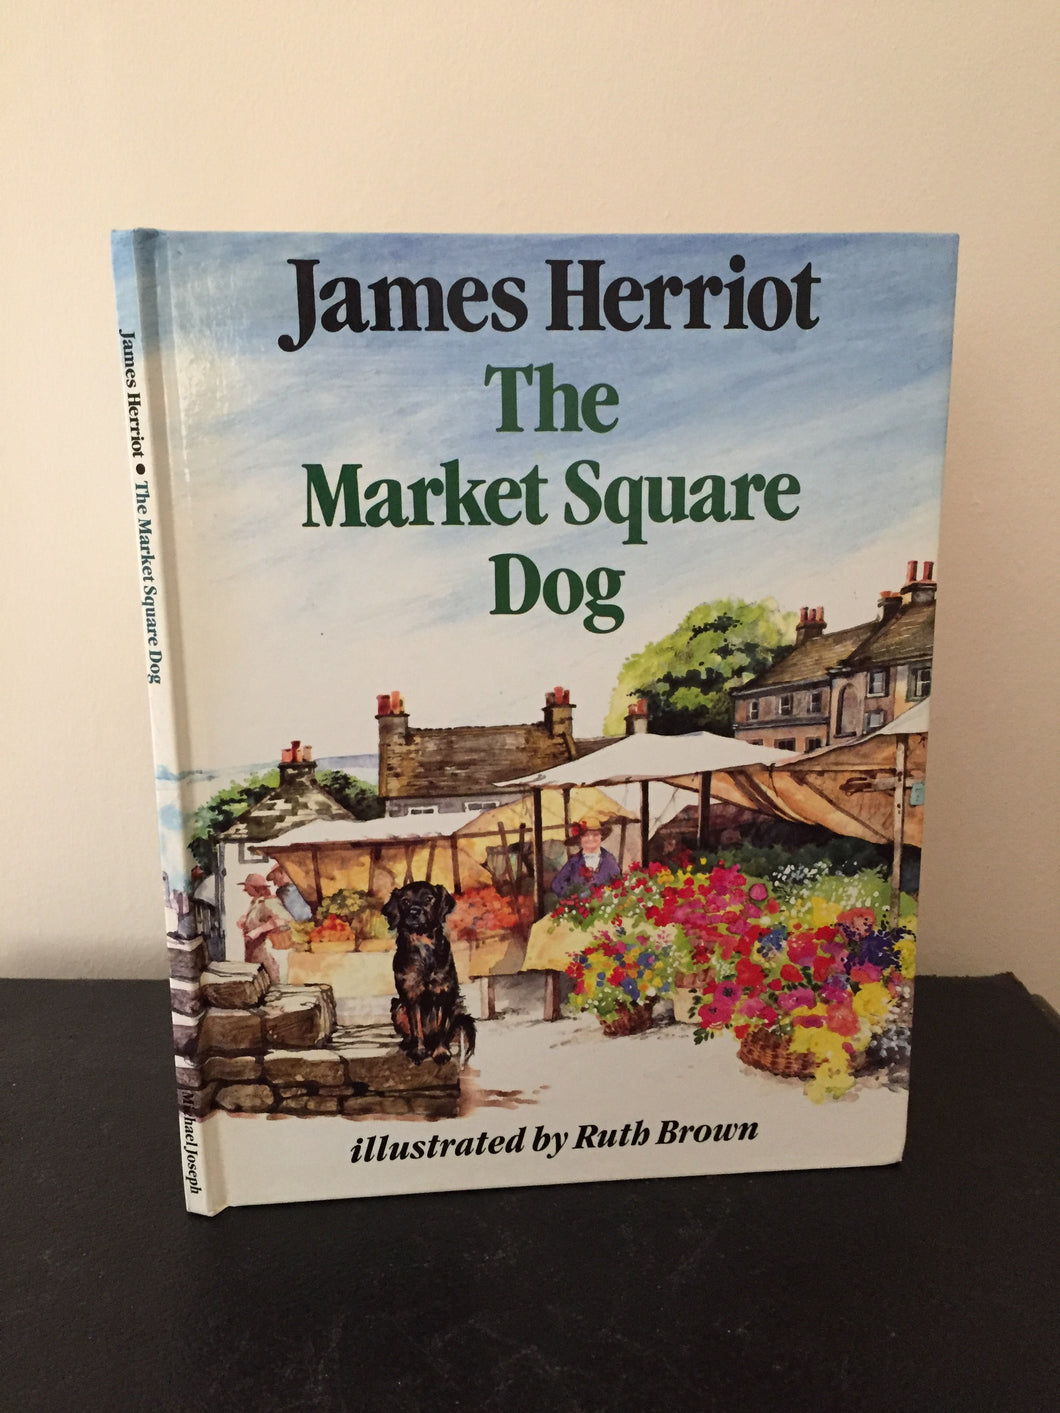 The Market Square Dog